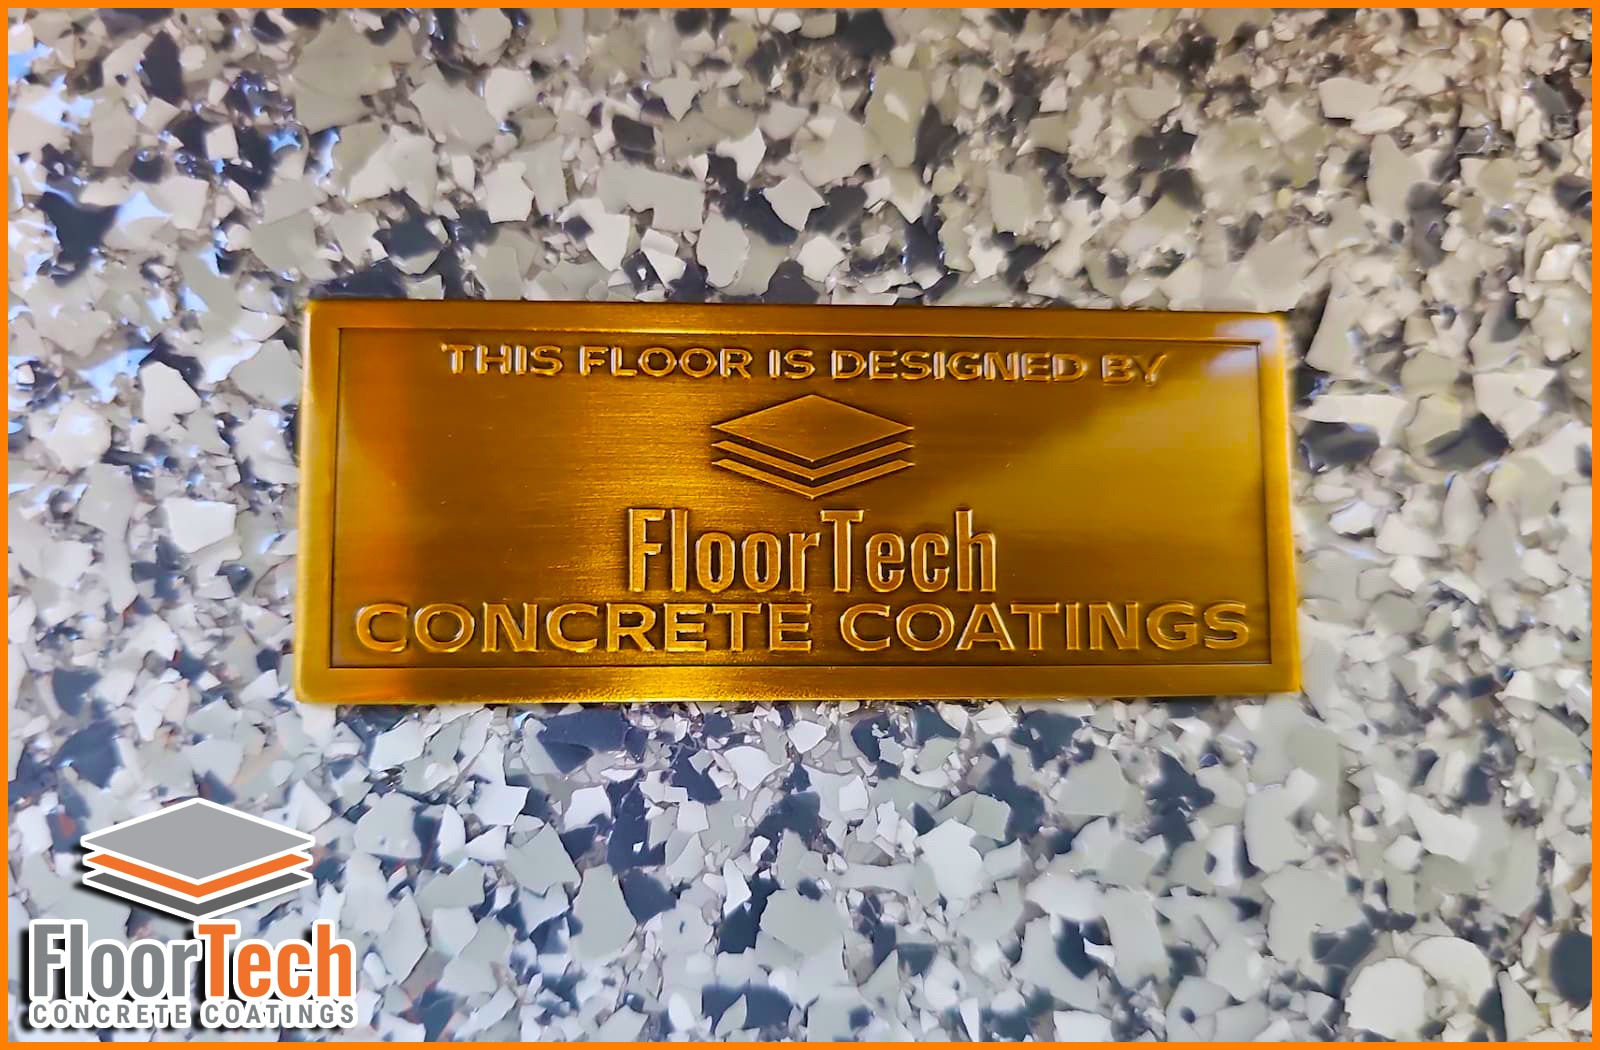 FloorTech Emblem on Coating Floor